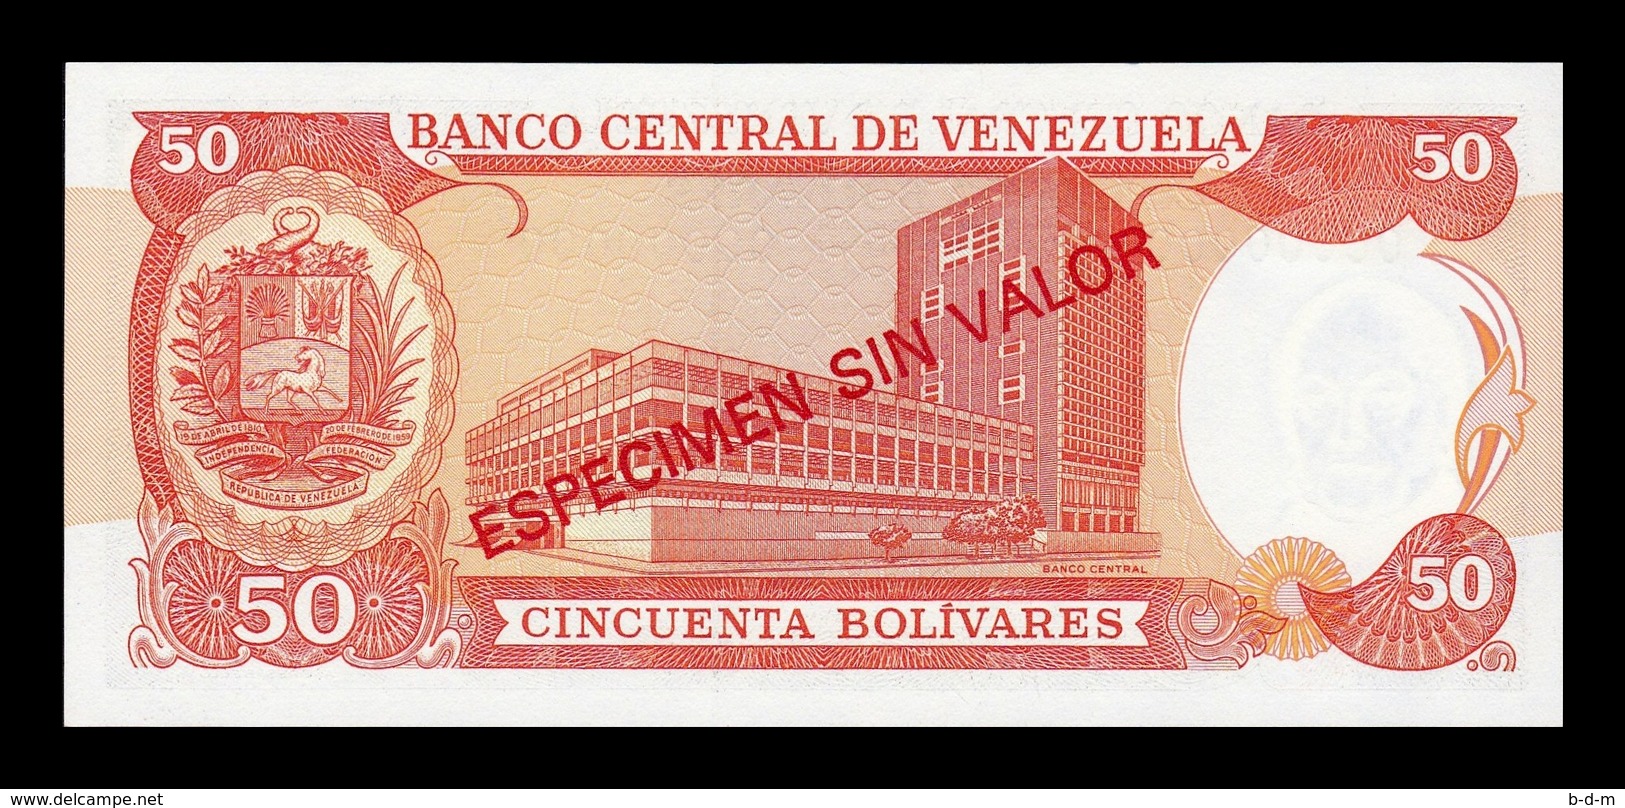 Venezuela 50 Bolívares 1998 Pick 65Gs Specimen SC UNC - Venezuela